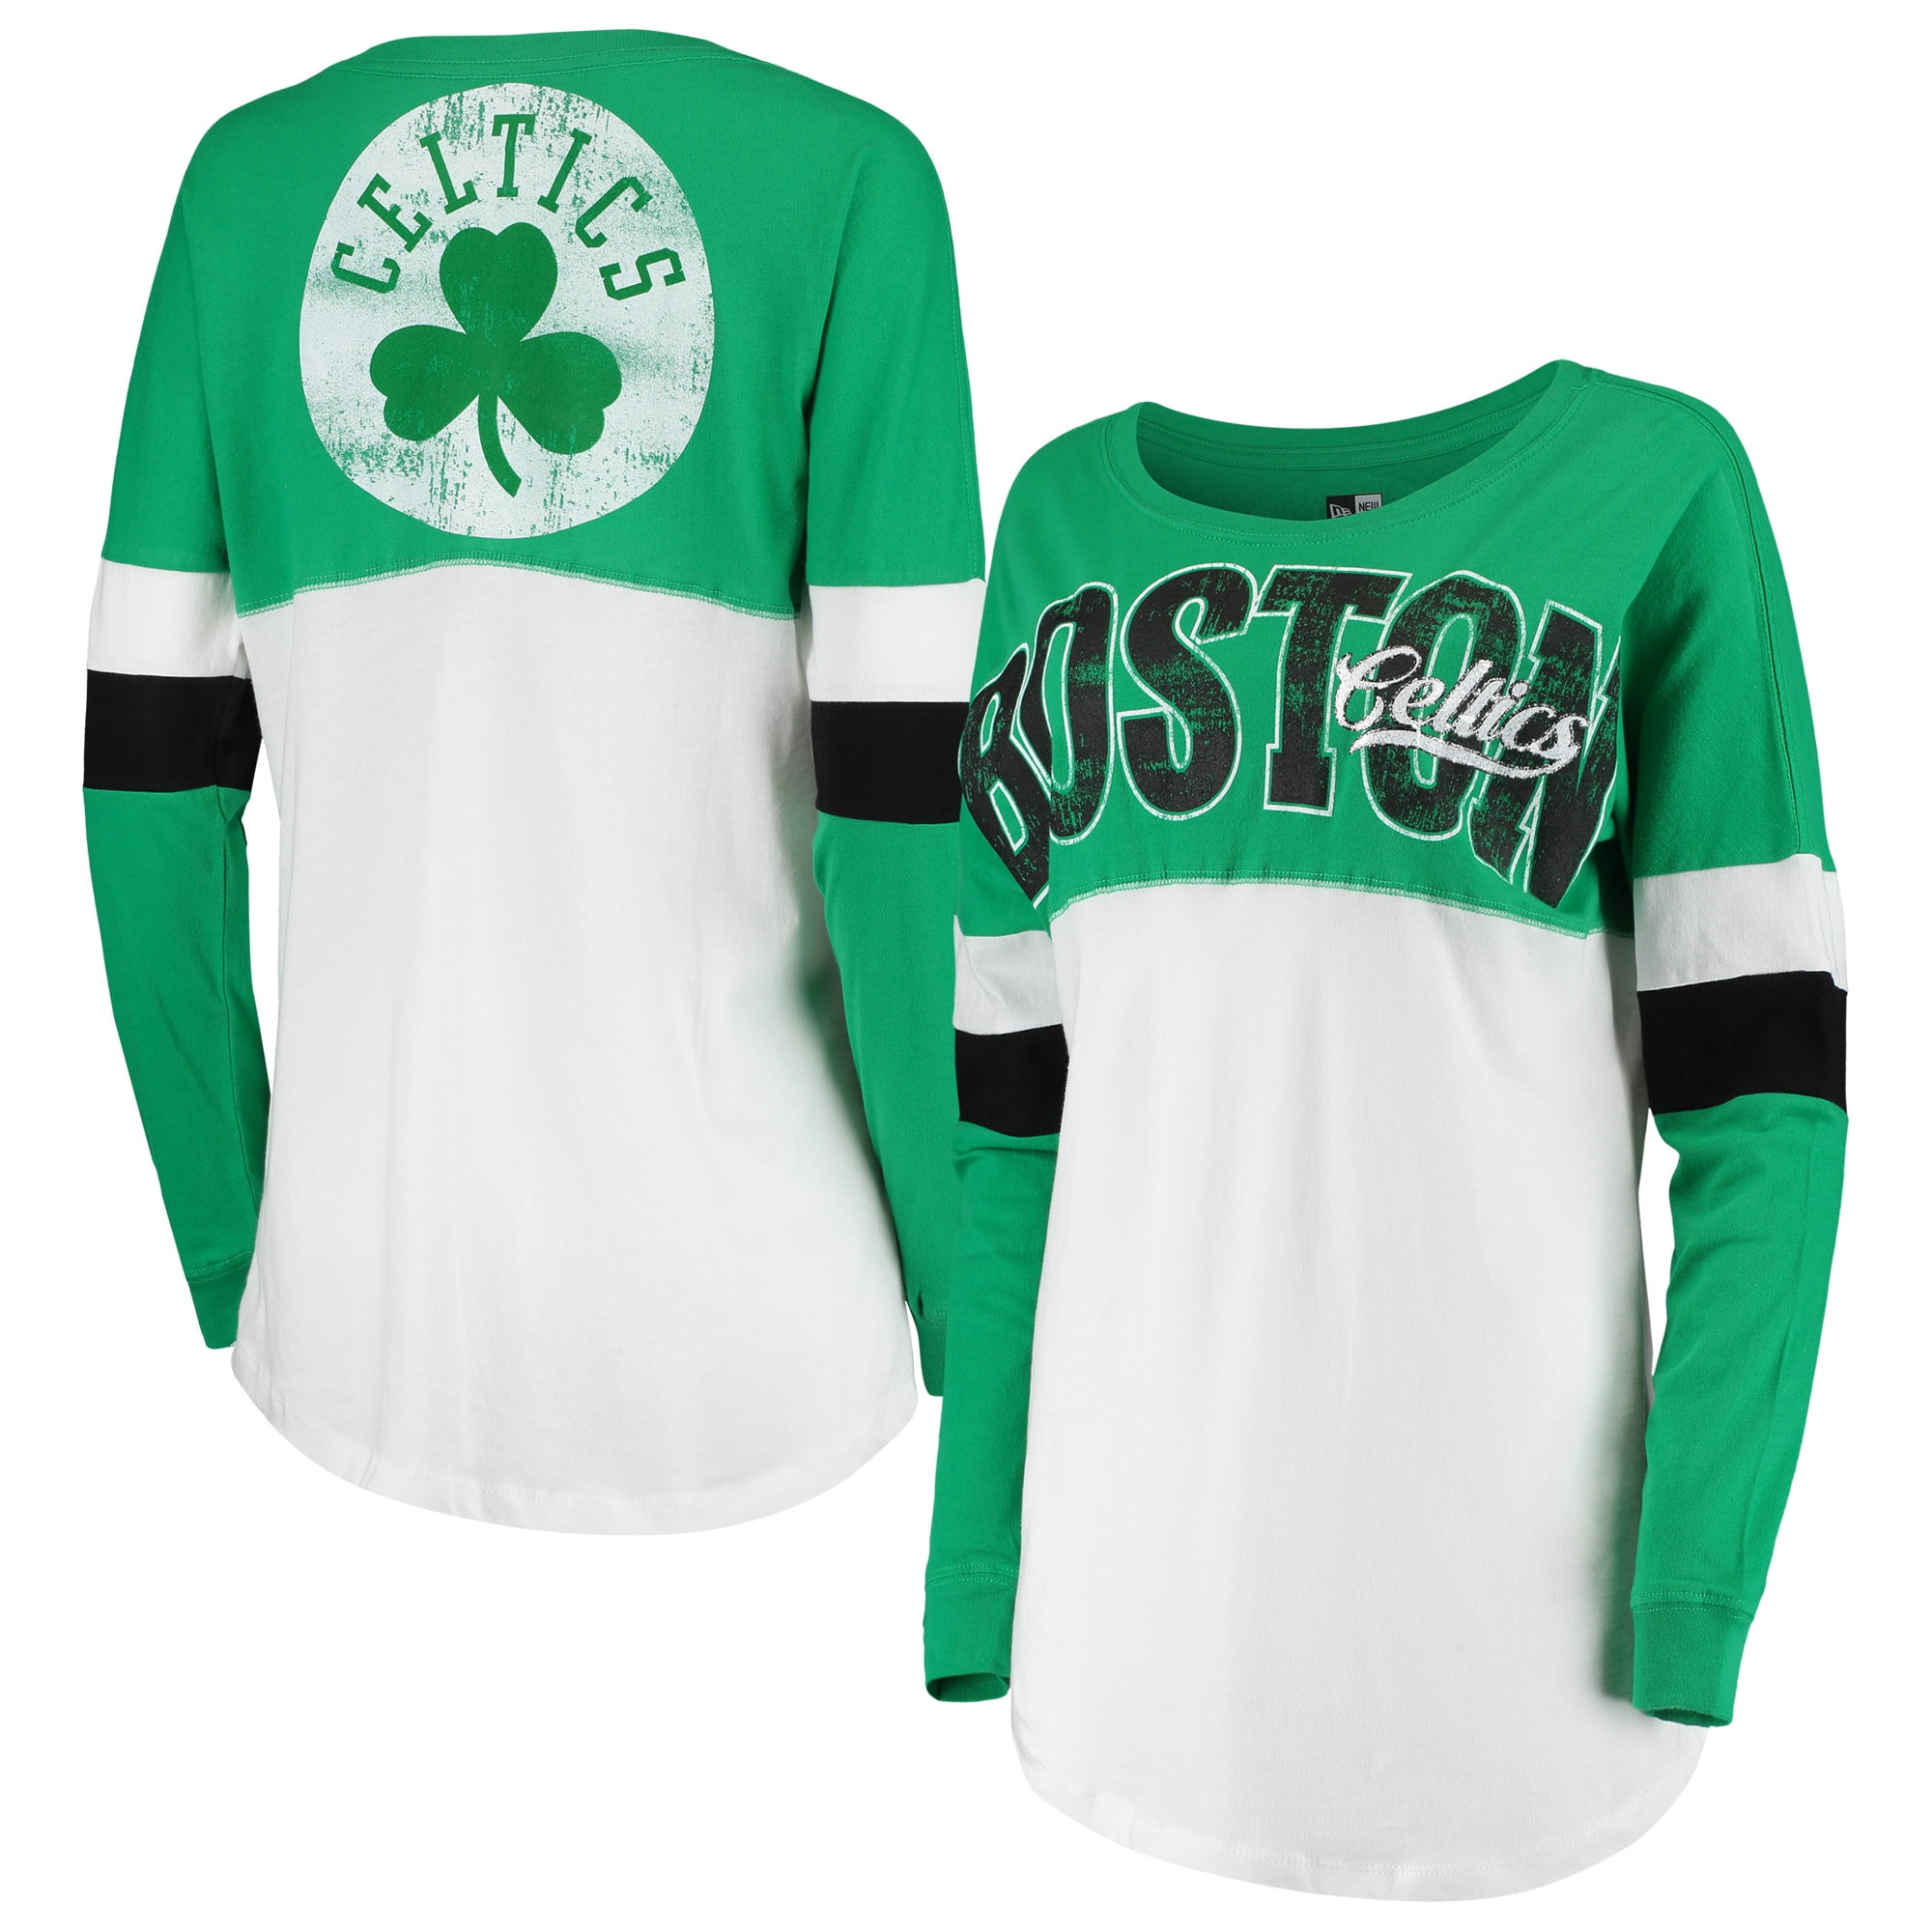 boston celtics new jersey